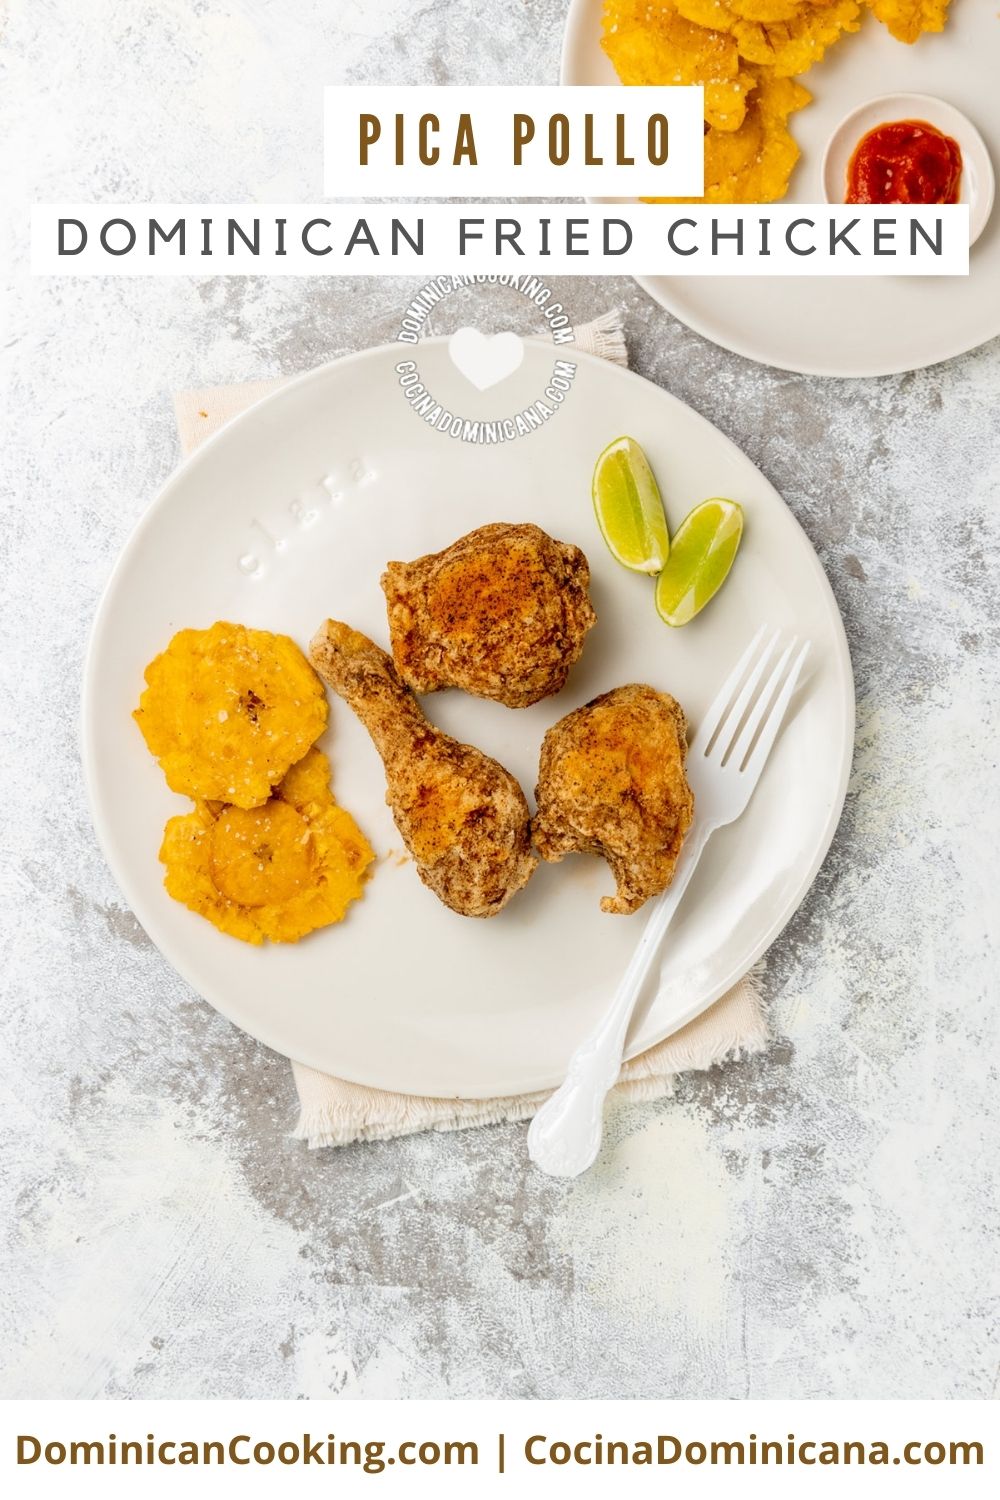 https://www.dominicancooking.com/wp-content/uploads/Pica-pollo-dominican-fried-chicken-recipe-Pin.jpg